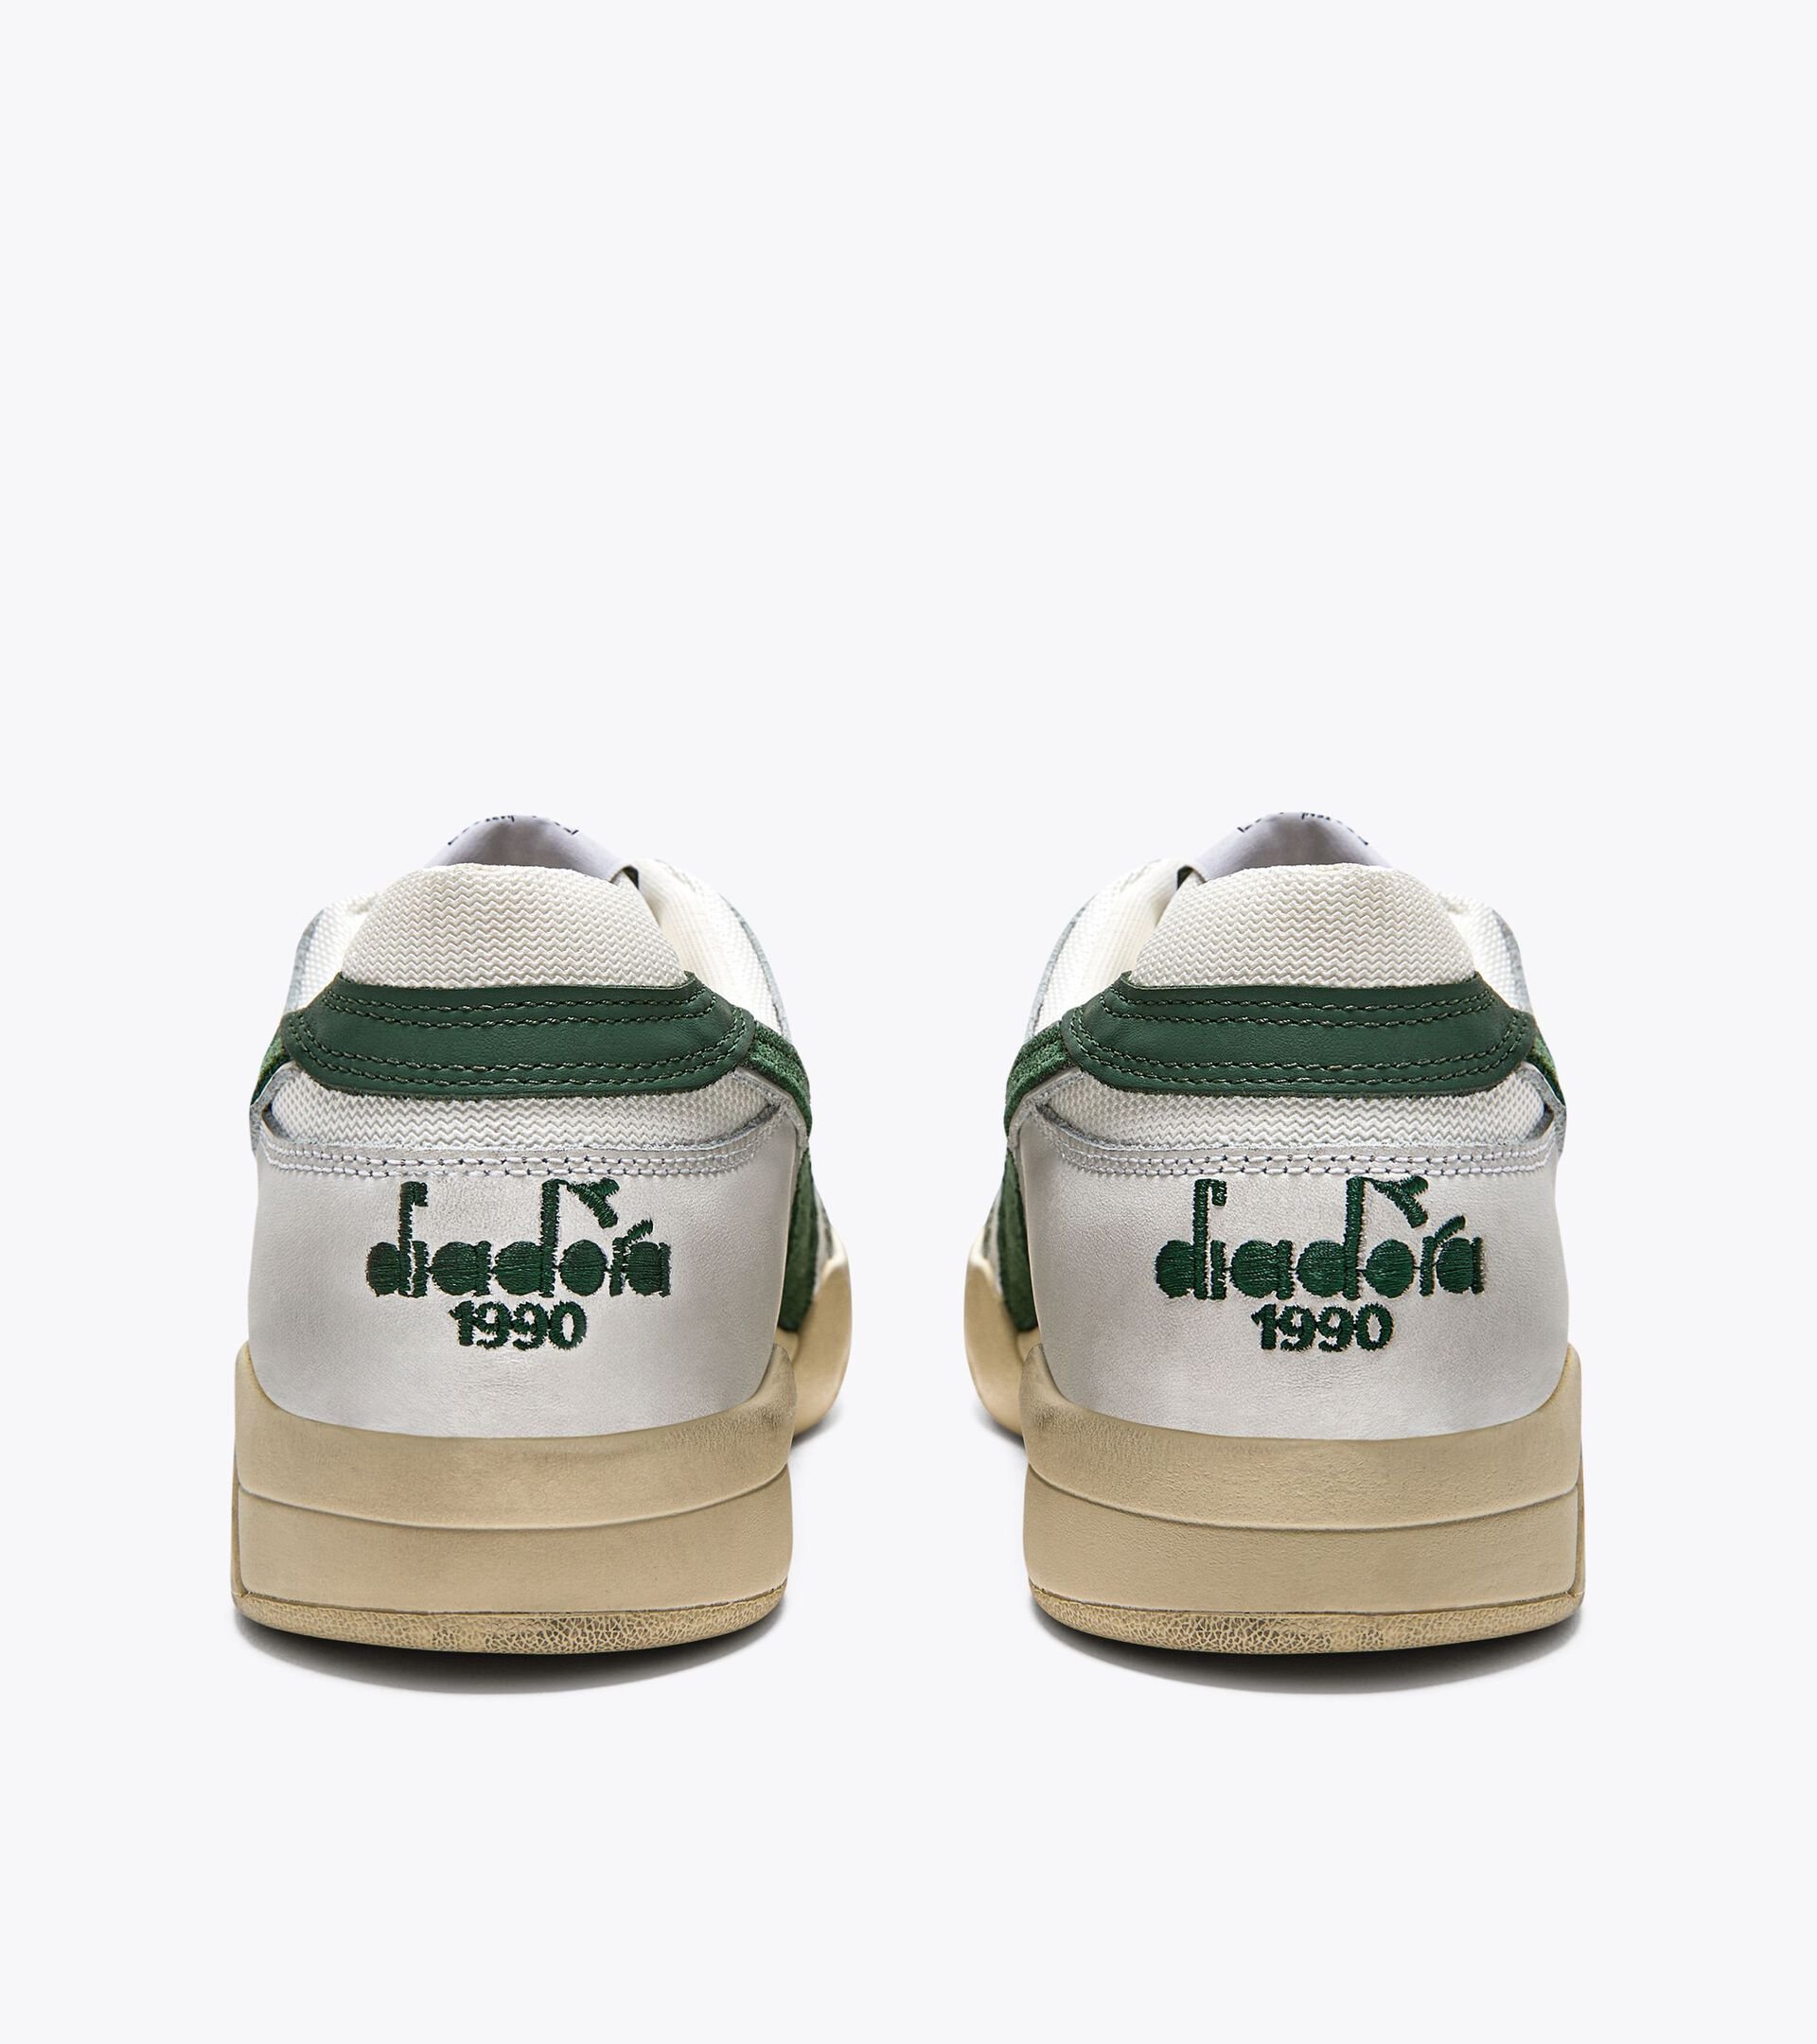 Heritage shoe - Gender Neutral B.560 USED WHITE/FOGLIAGE GREEN - Diadora